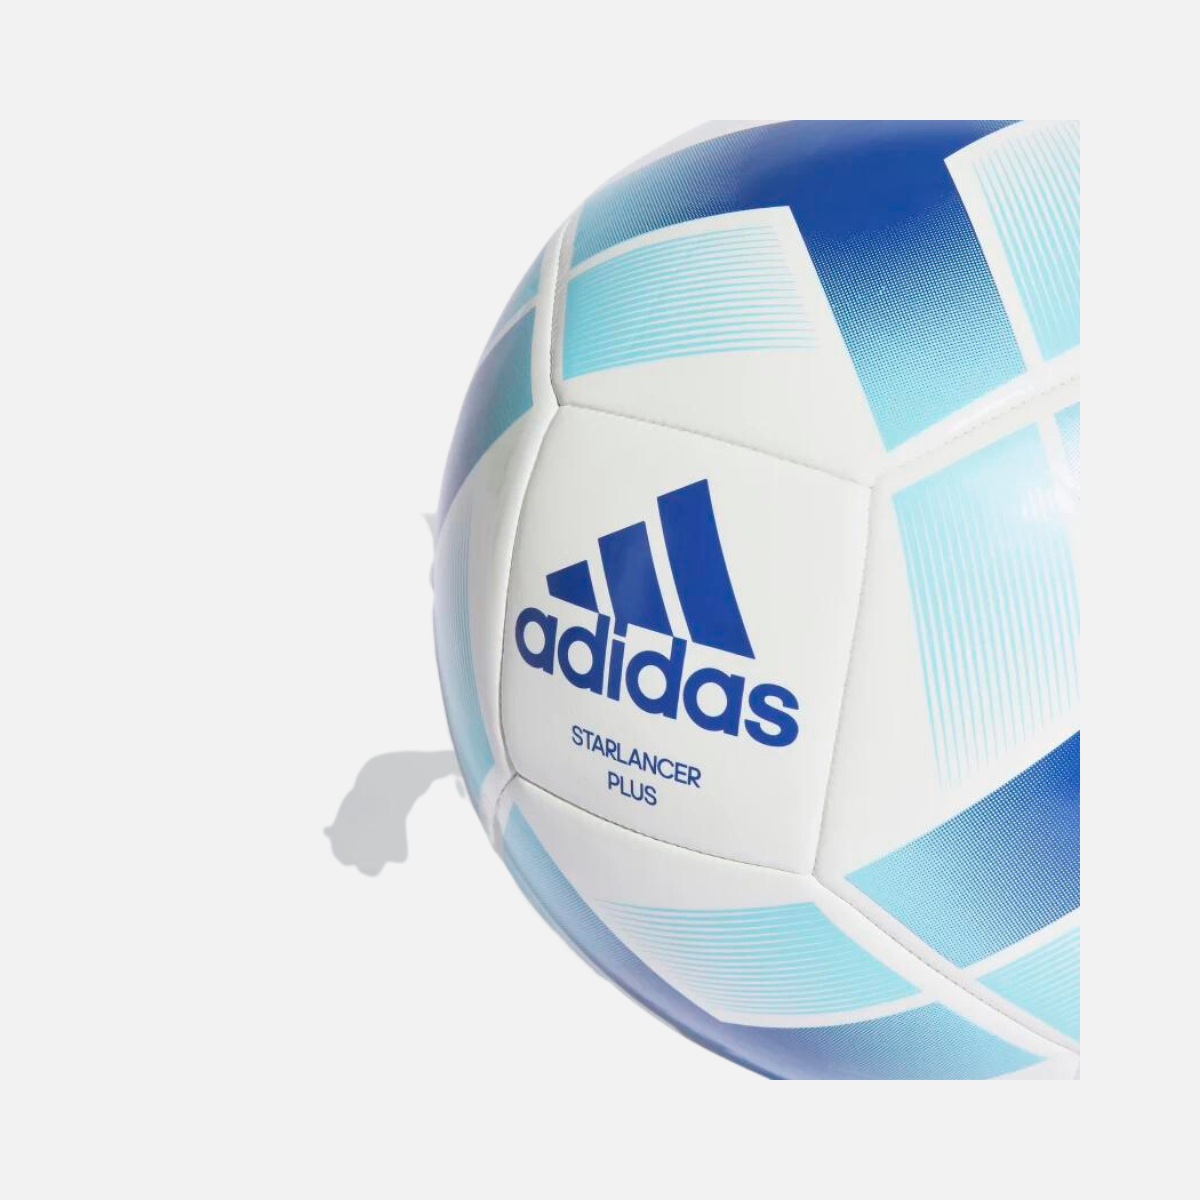 Adidas Starlancer Plus Football -White/Royal Blue/Bright Cyan